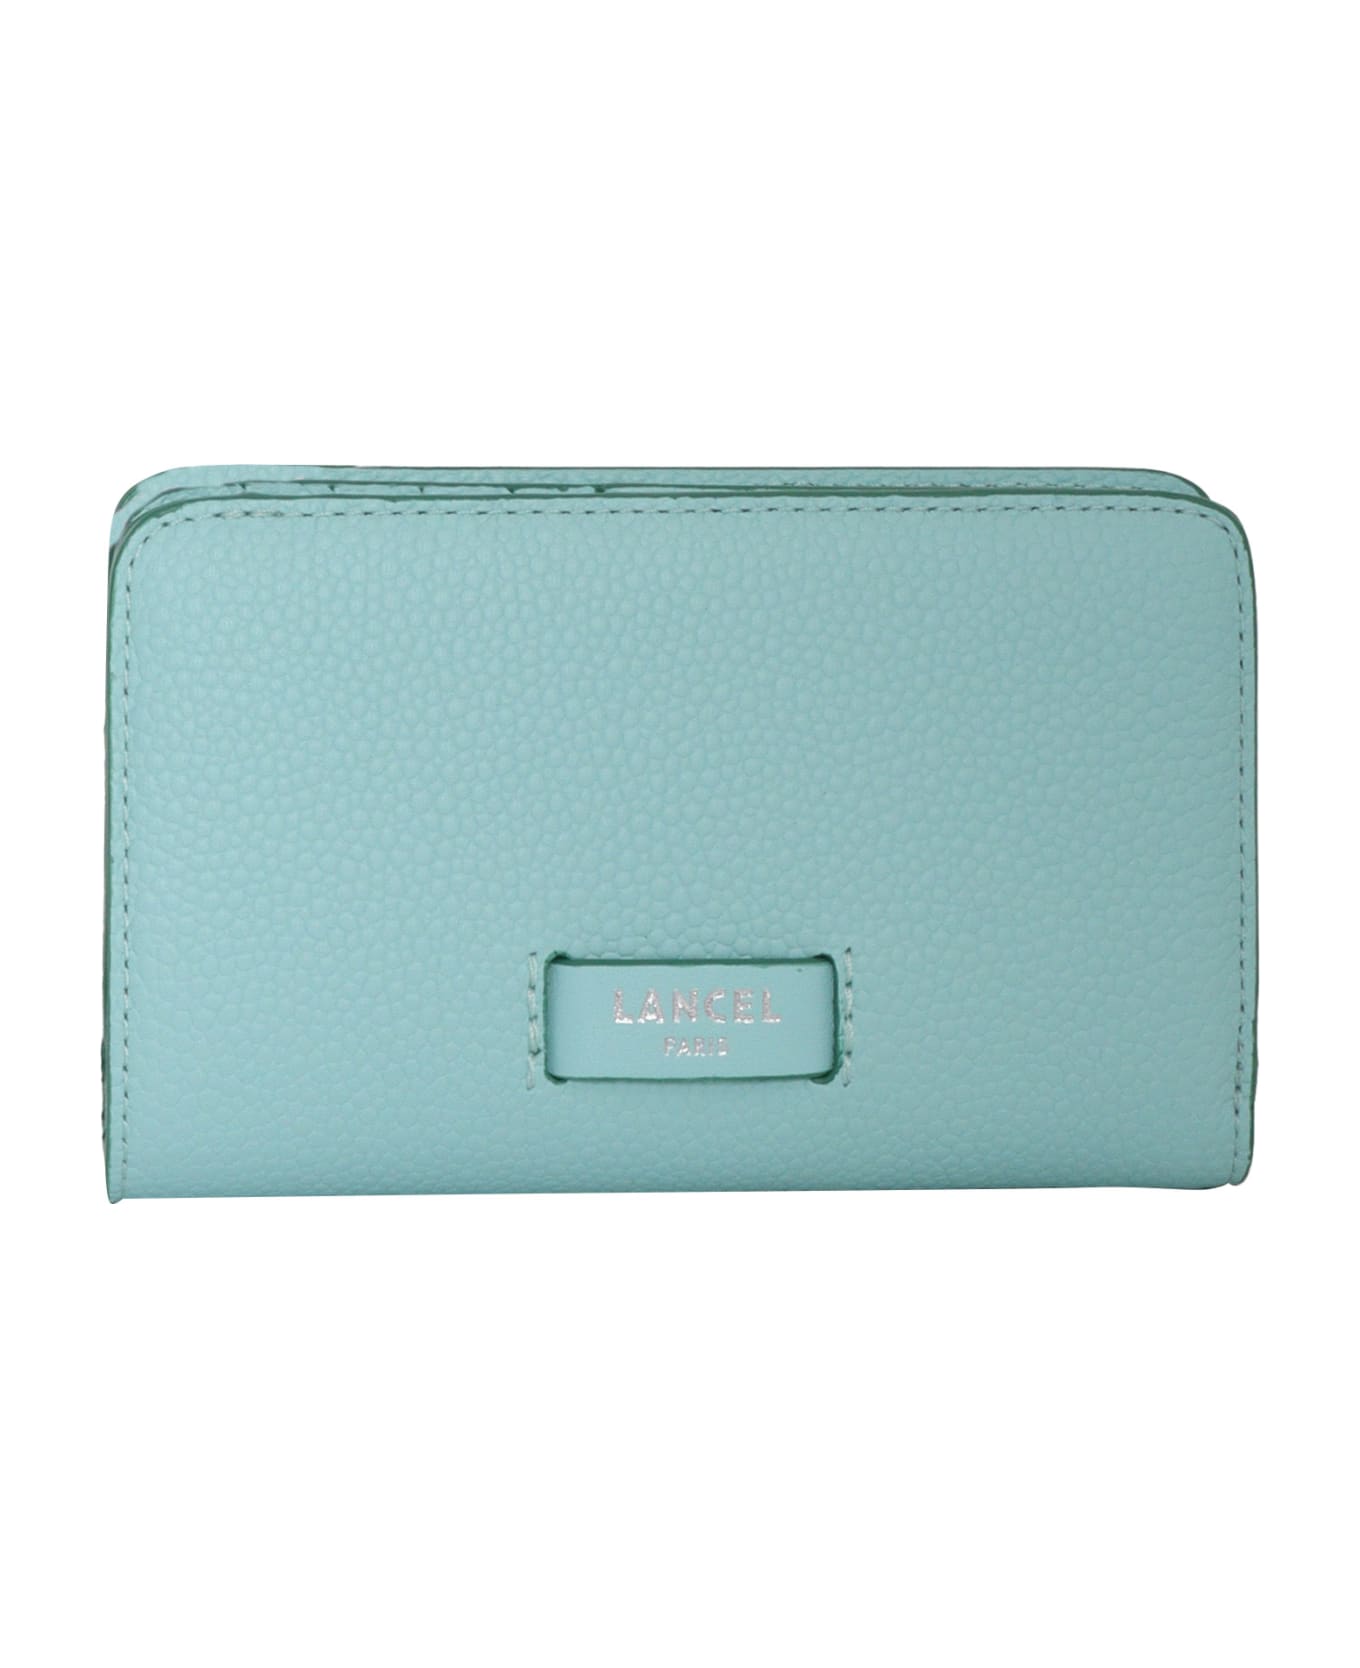 Lancel Light Blue Leather Wallet - GREEN 財布